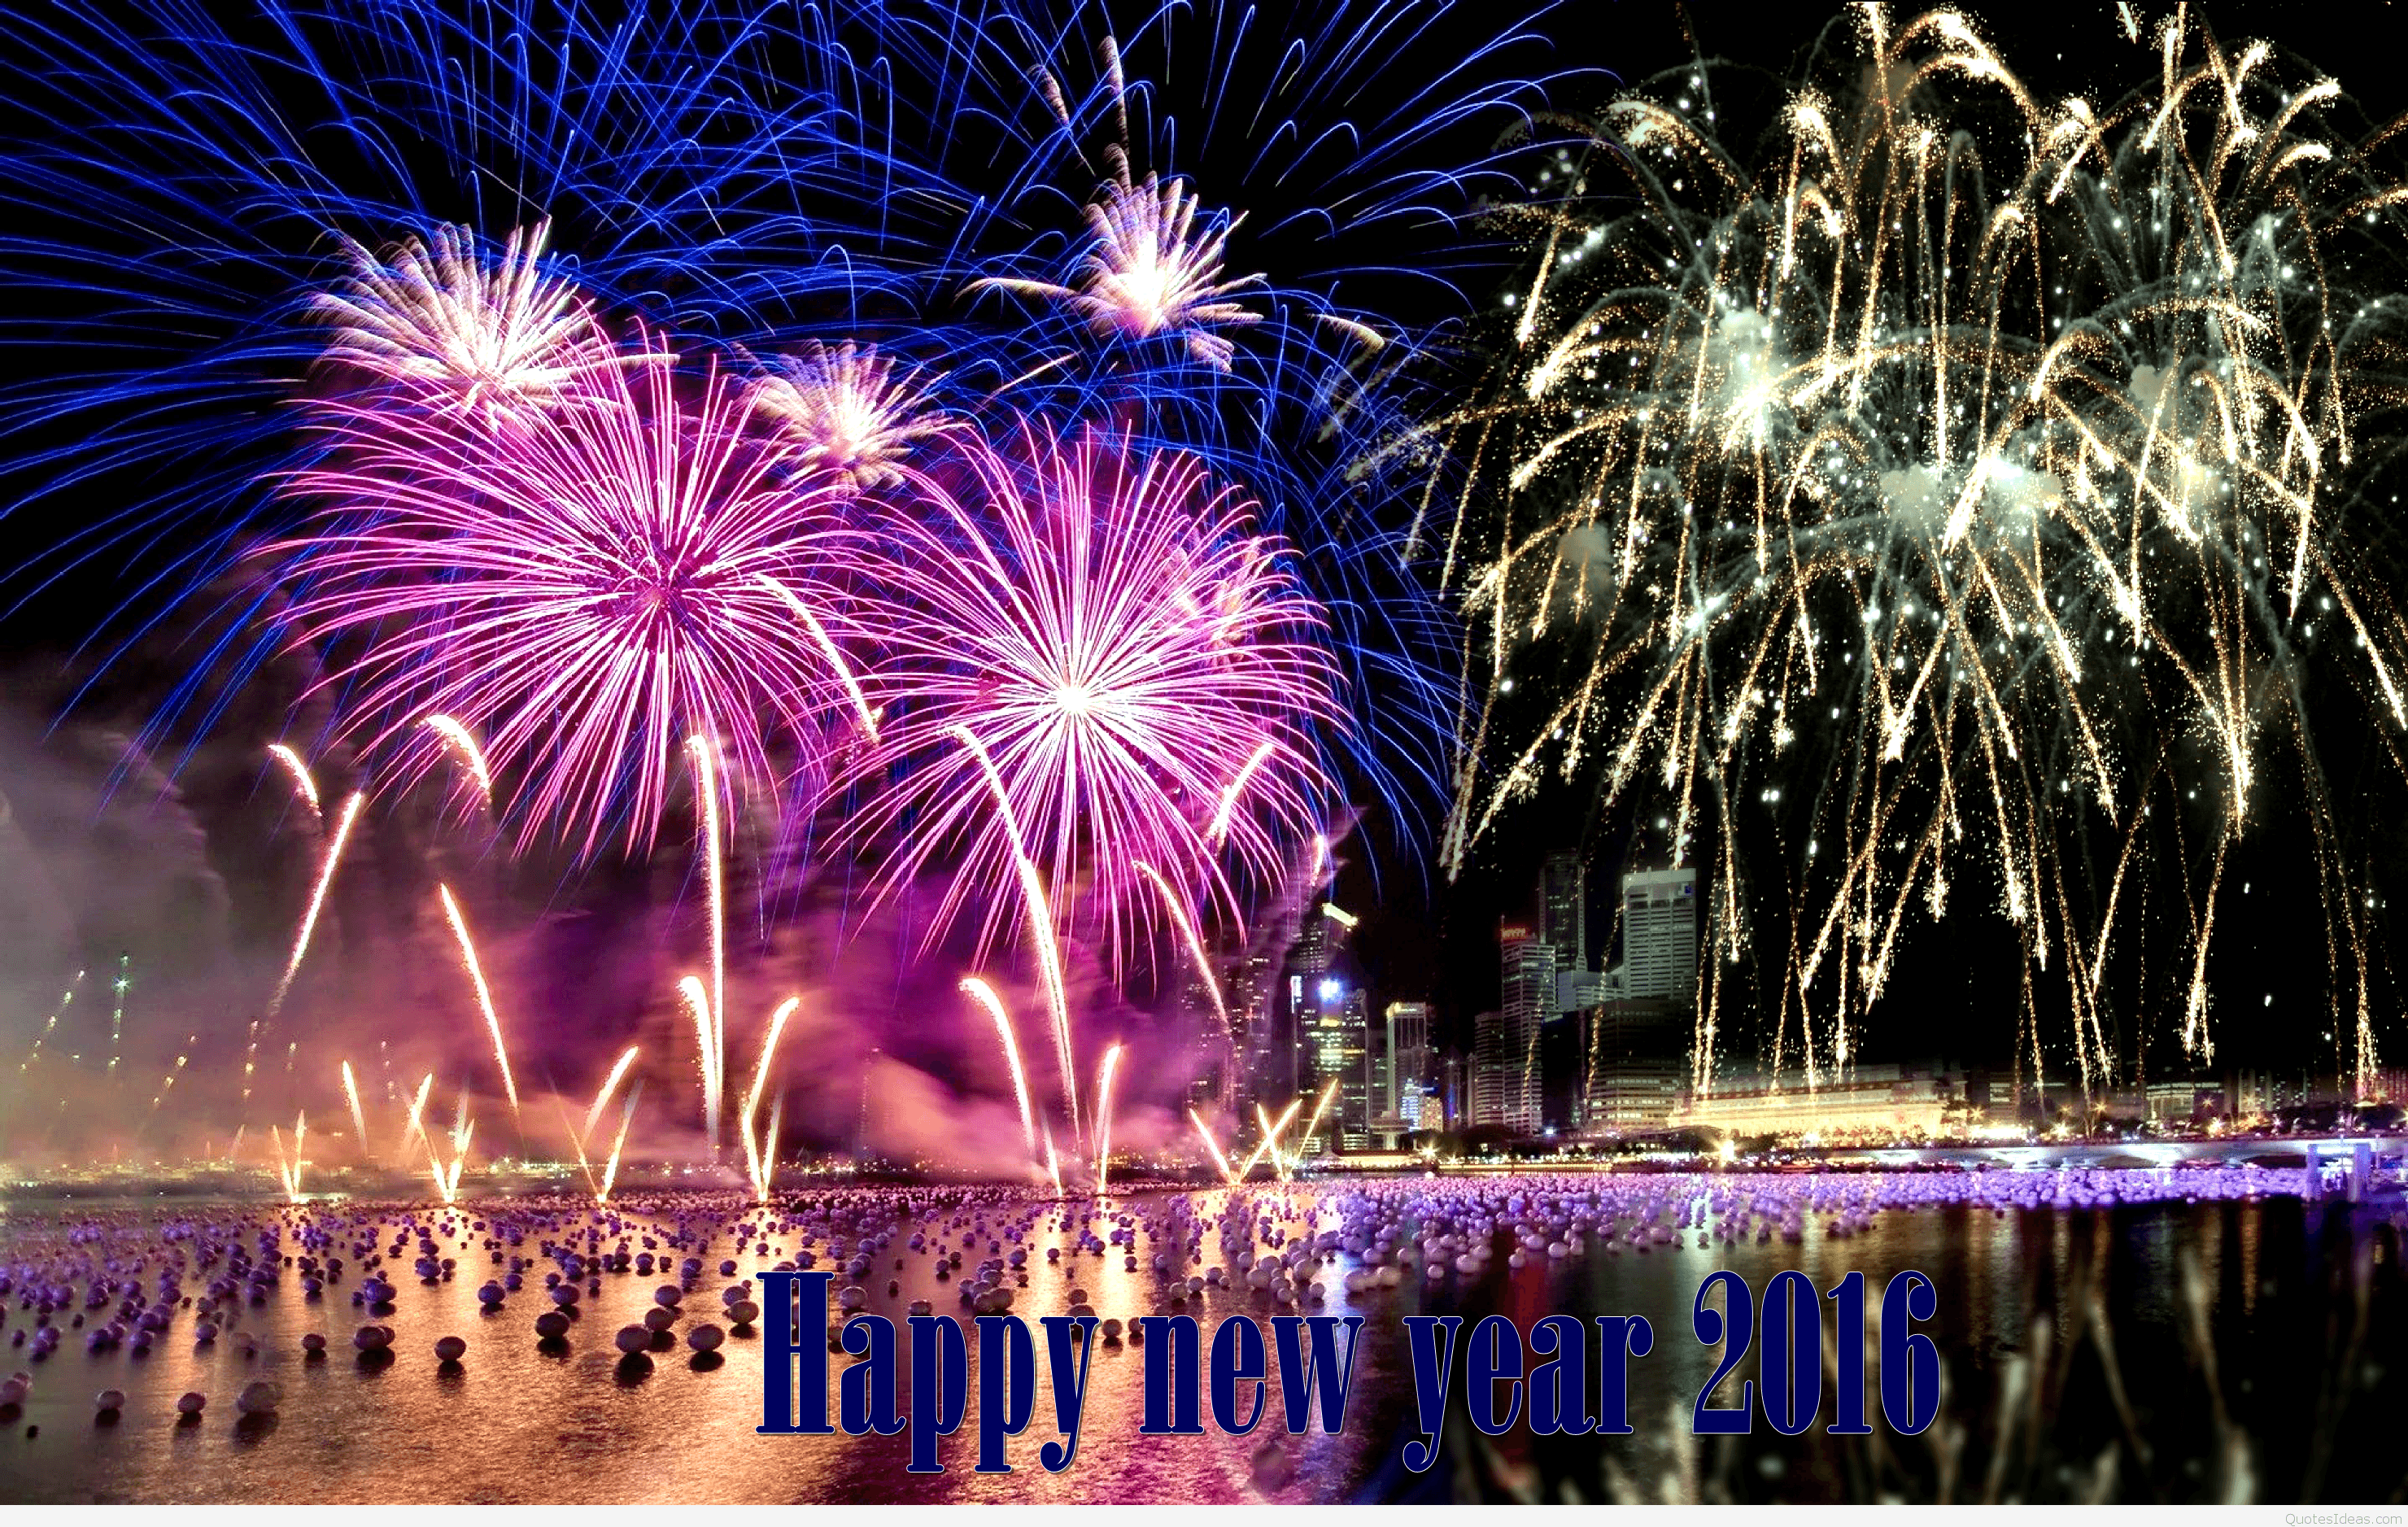 Happy New Year 2015 CountDown Celebration Fireworks wallpaperx1877